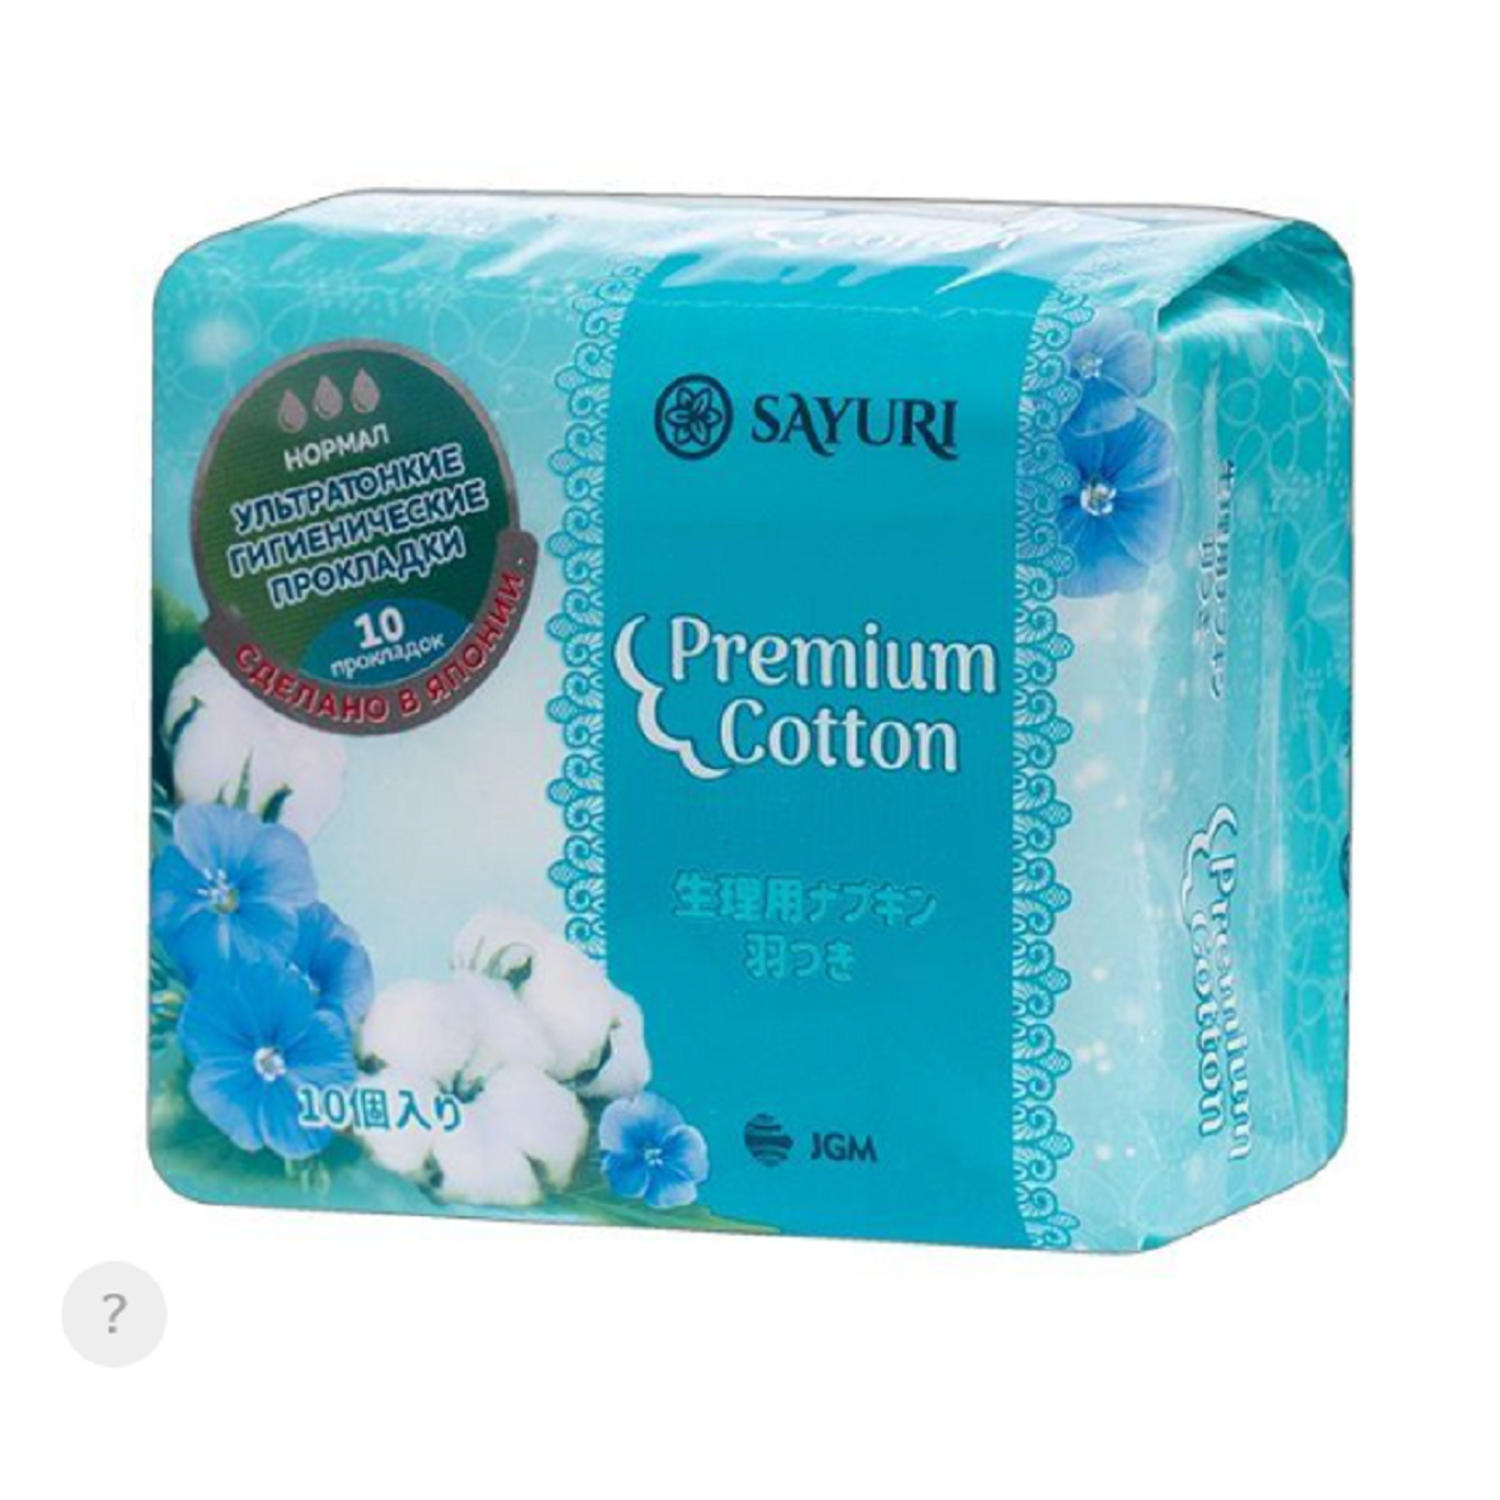 Ежедневные прокладки SAYURI Premium Cotton - фото 1